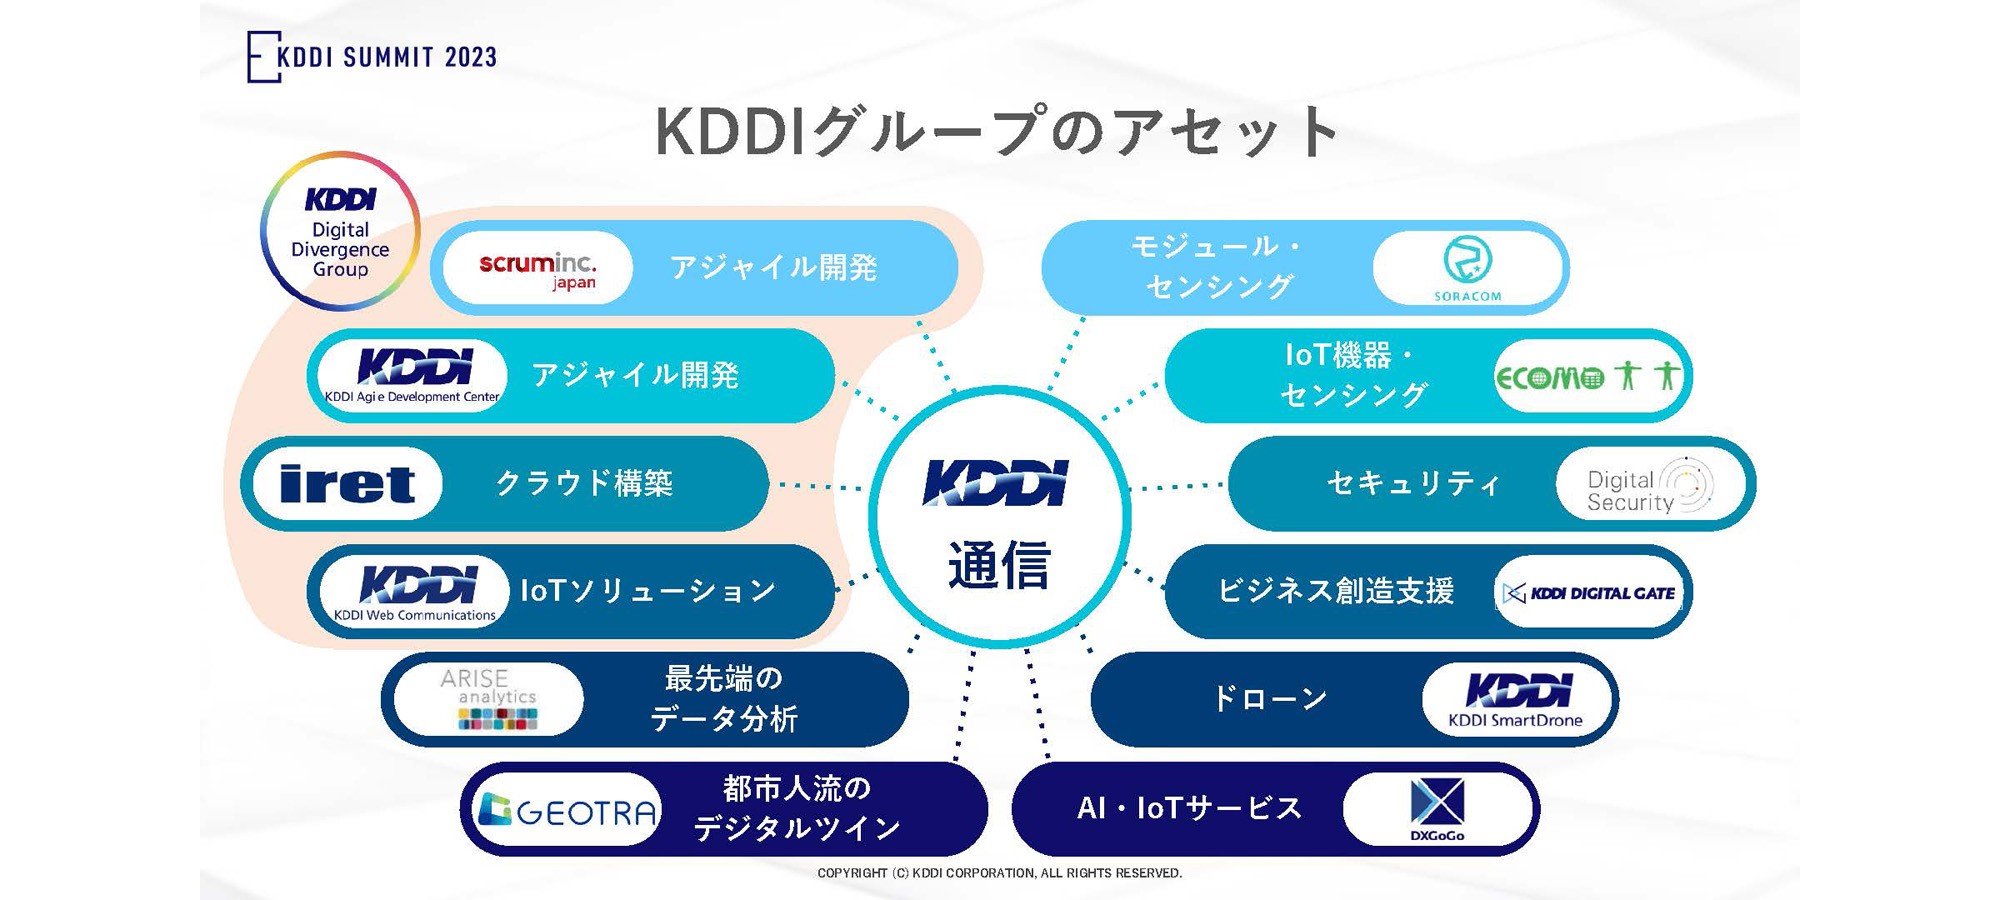 KDDIグループのアセット「KDDI Digital Divergence Group」「scruminc.japan」アジャイル開発、「KDDI Agile Development Center」アジャイル開発、「iret」クラウド構築、「KODI Web Communications」IoTソリューション、「ARISE analytics」最先端のデータ分析、「GEOTRA」都市人流のデジタルツイン、「SORACOM」モジュール・センシング、「Digital Security」セキュリティ、「KDDI DIGITAL GATE」ビジネス創造支援、「KDDI Smart Drone」ドローン、「DXGoGo」Al・loTサービス